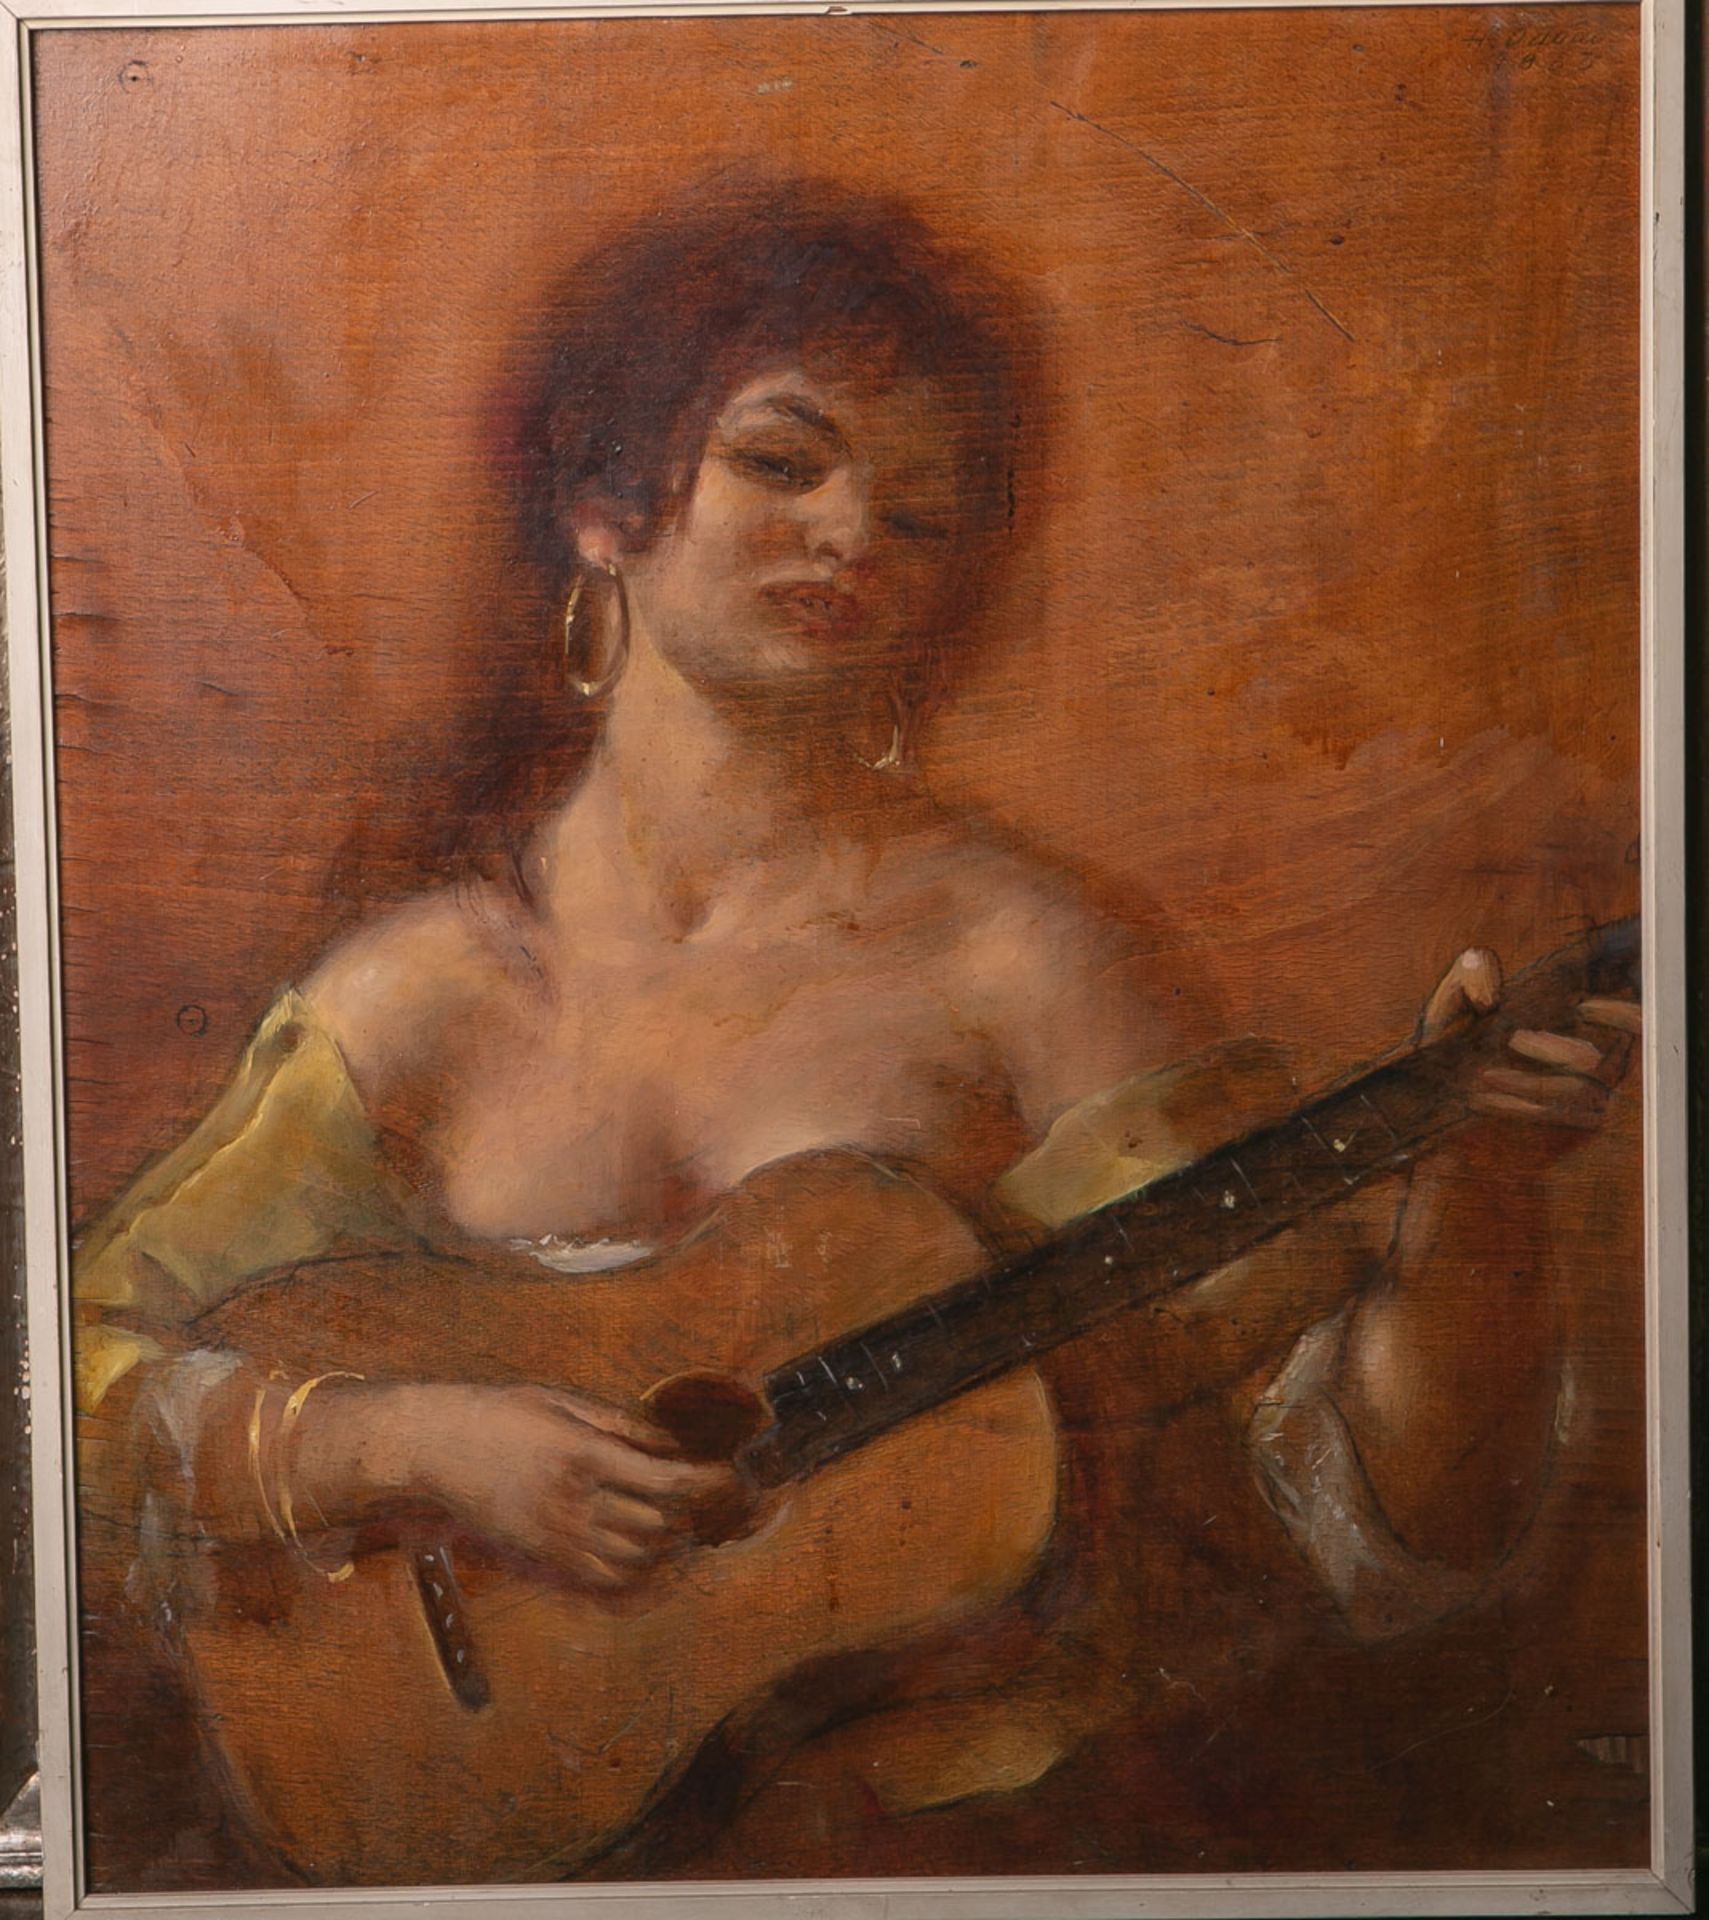 Unbekannter Künstler (20. Jh.), Gitarre spielende Spanierin, Öl/Sperrholzplatte, ca- 60 x 52 cm,